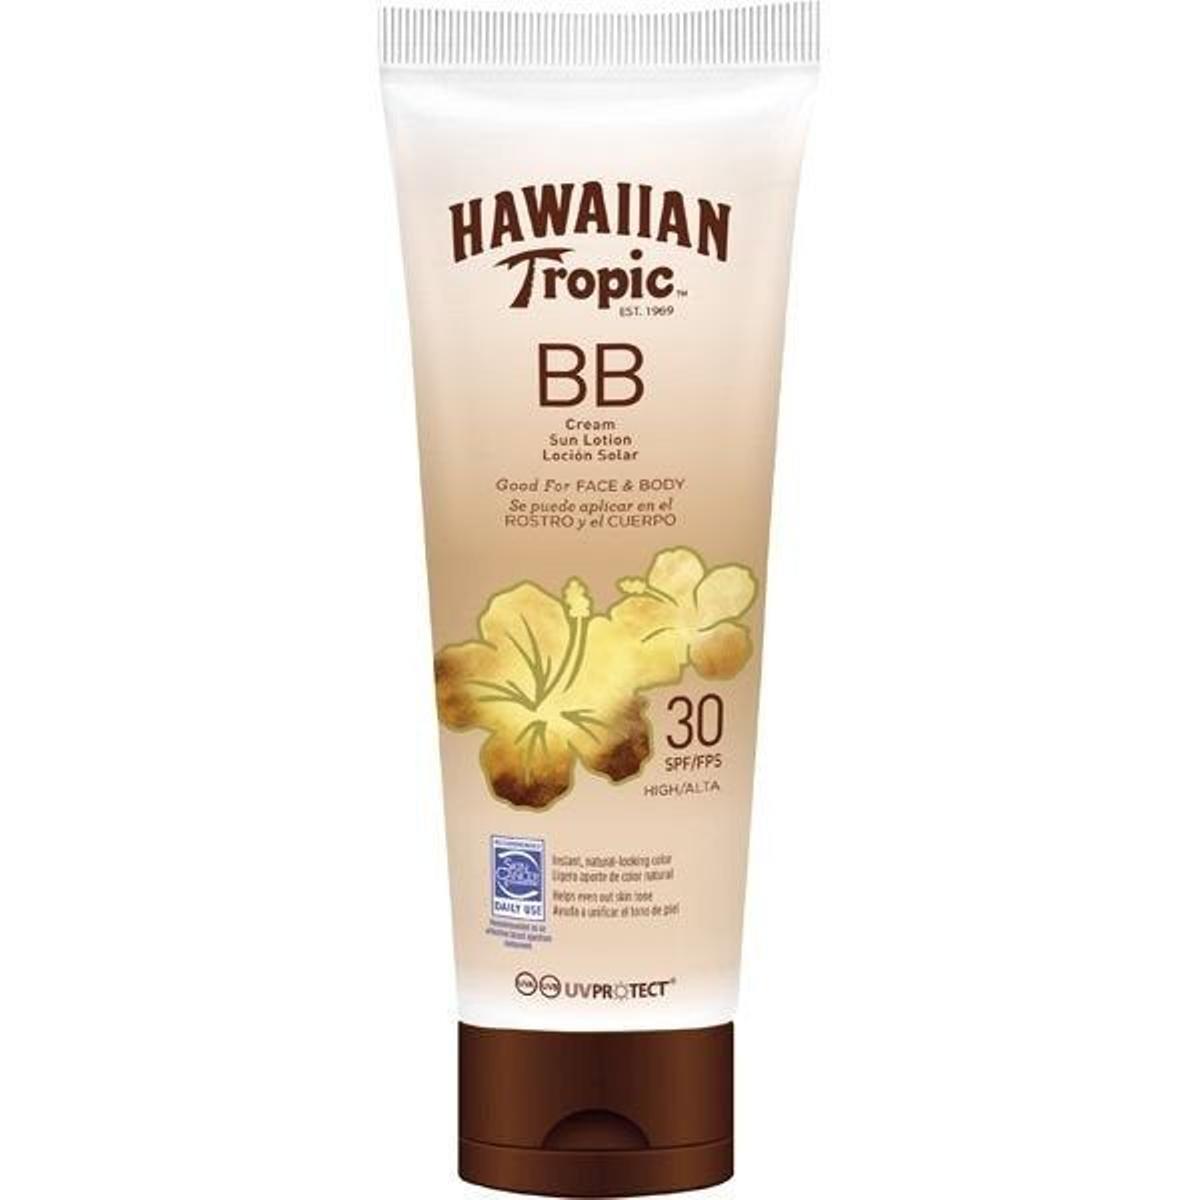 BB Cream Hawaiian Tropic. (Precio: 9,99 euros)